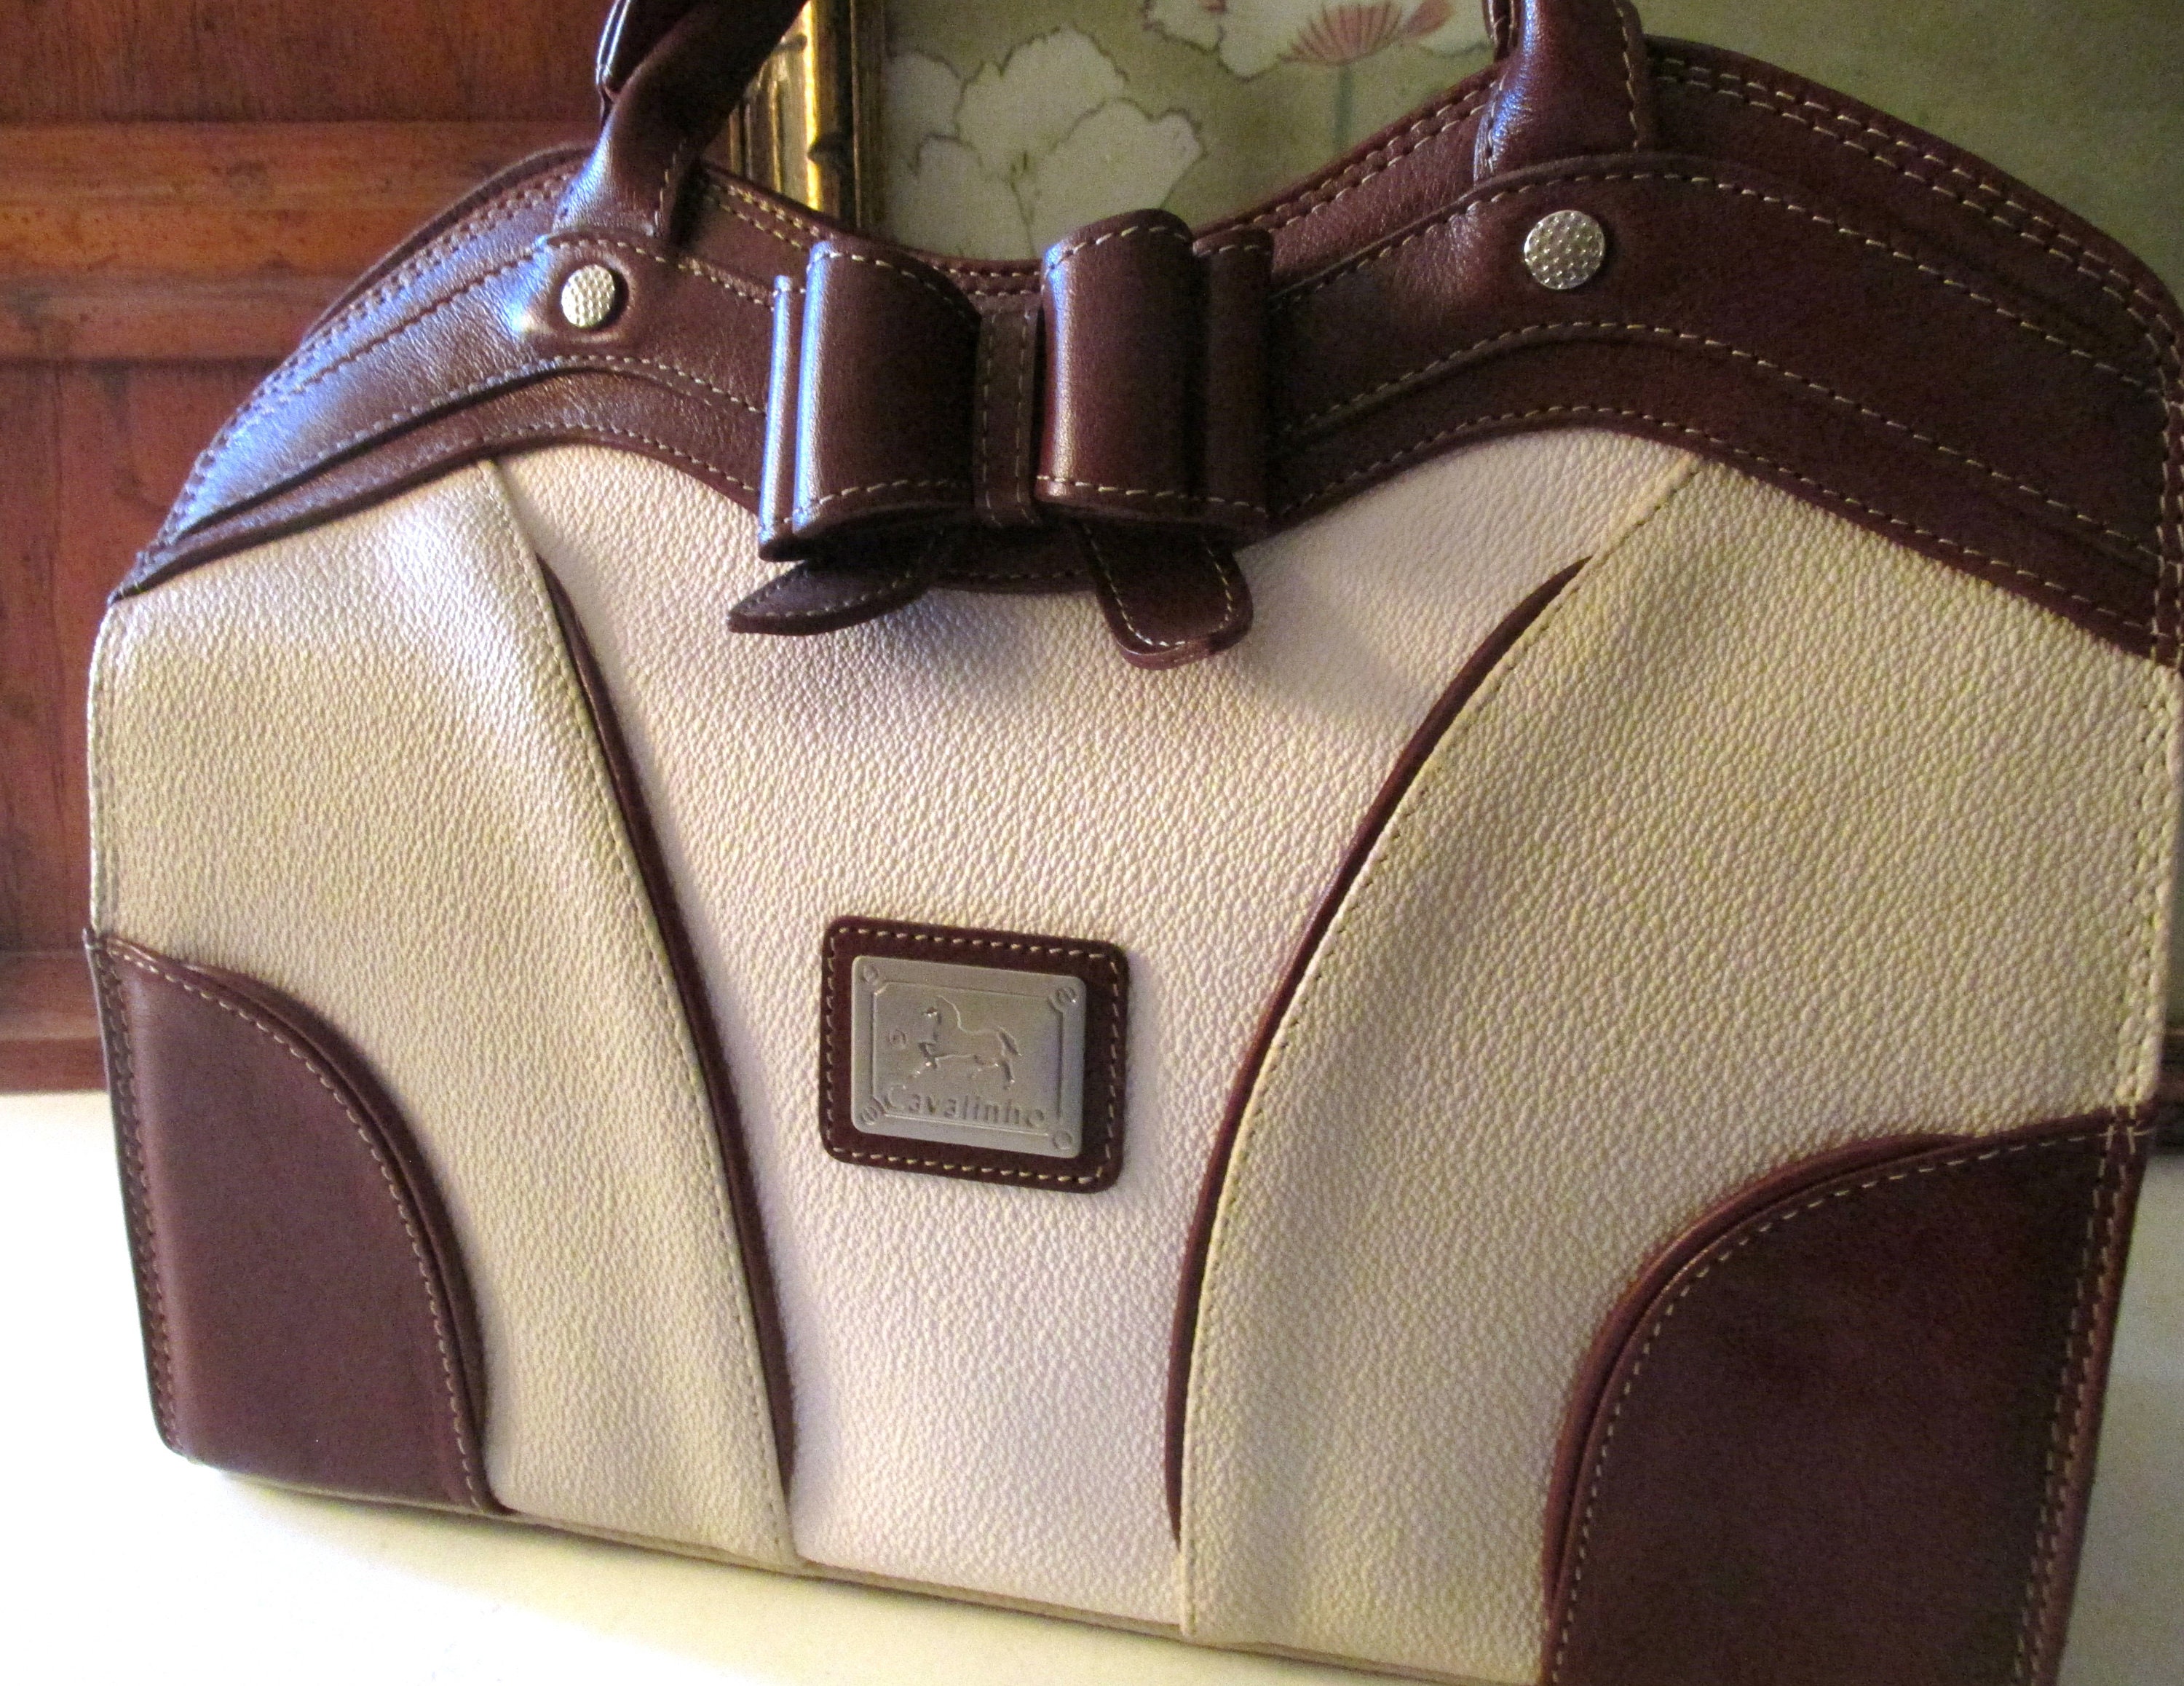 NEW made in Spain PETUSCO Coated Leather ETRUSCO Horses Handbag | eBay